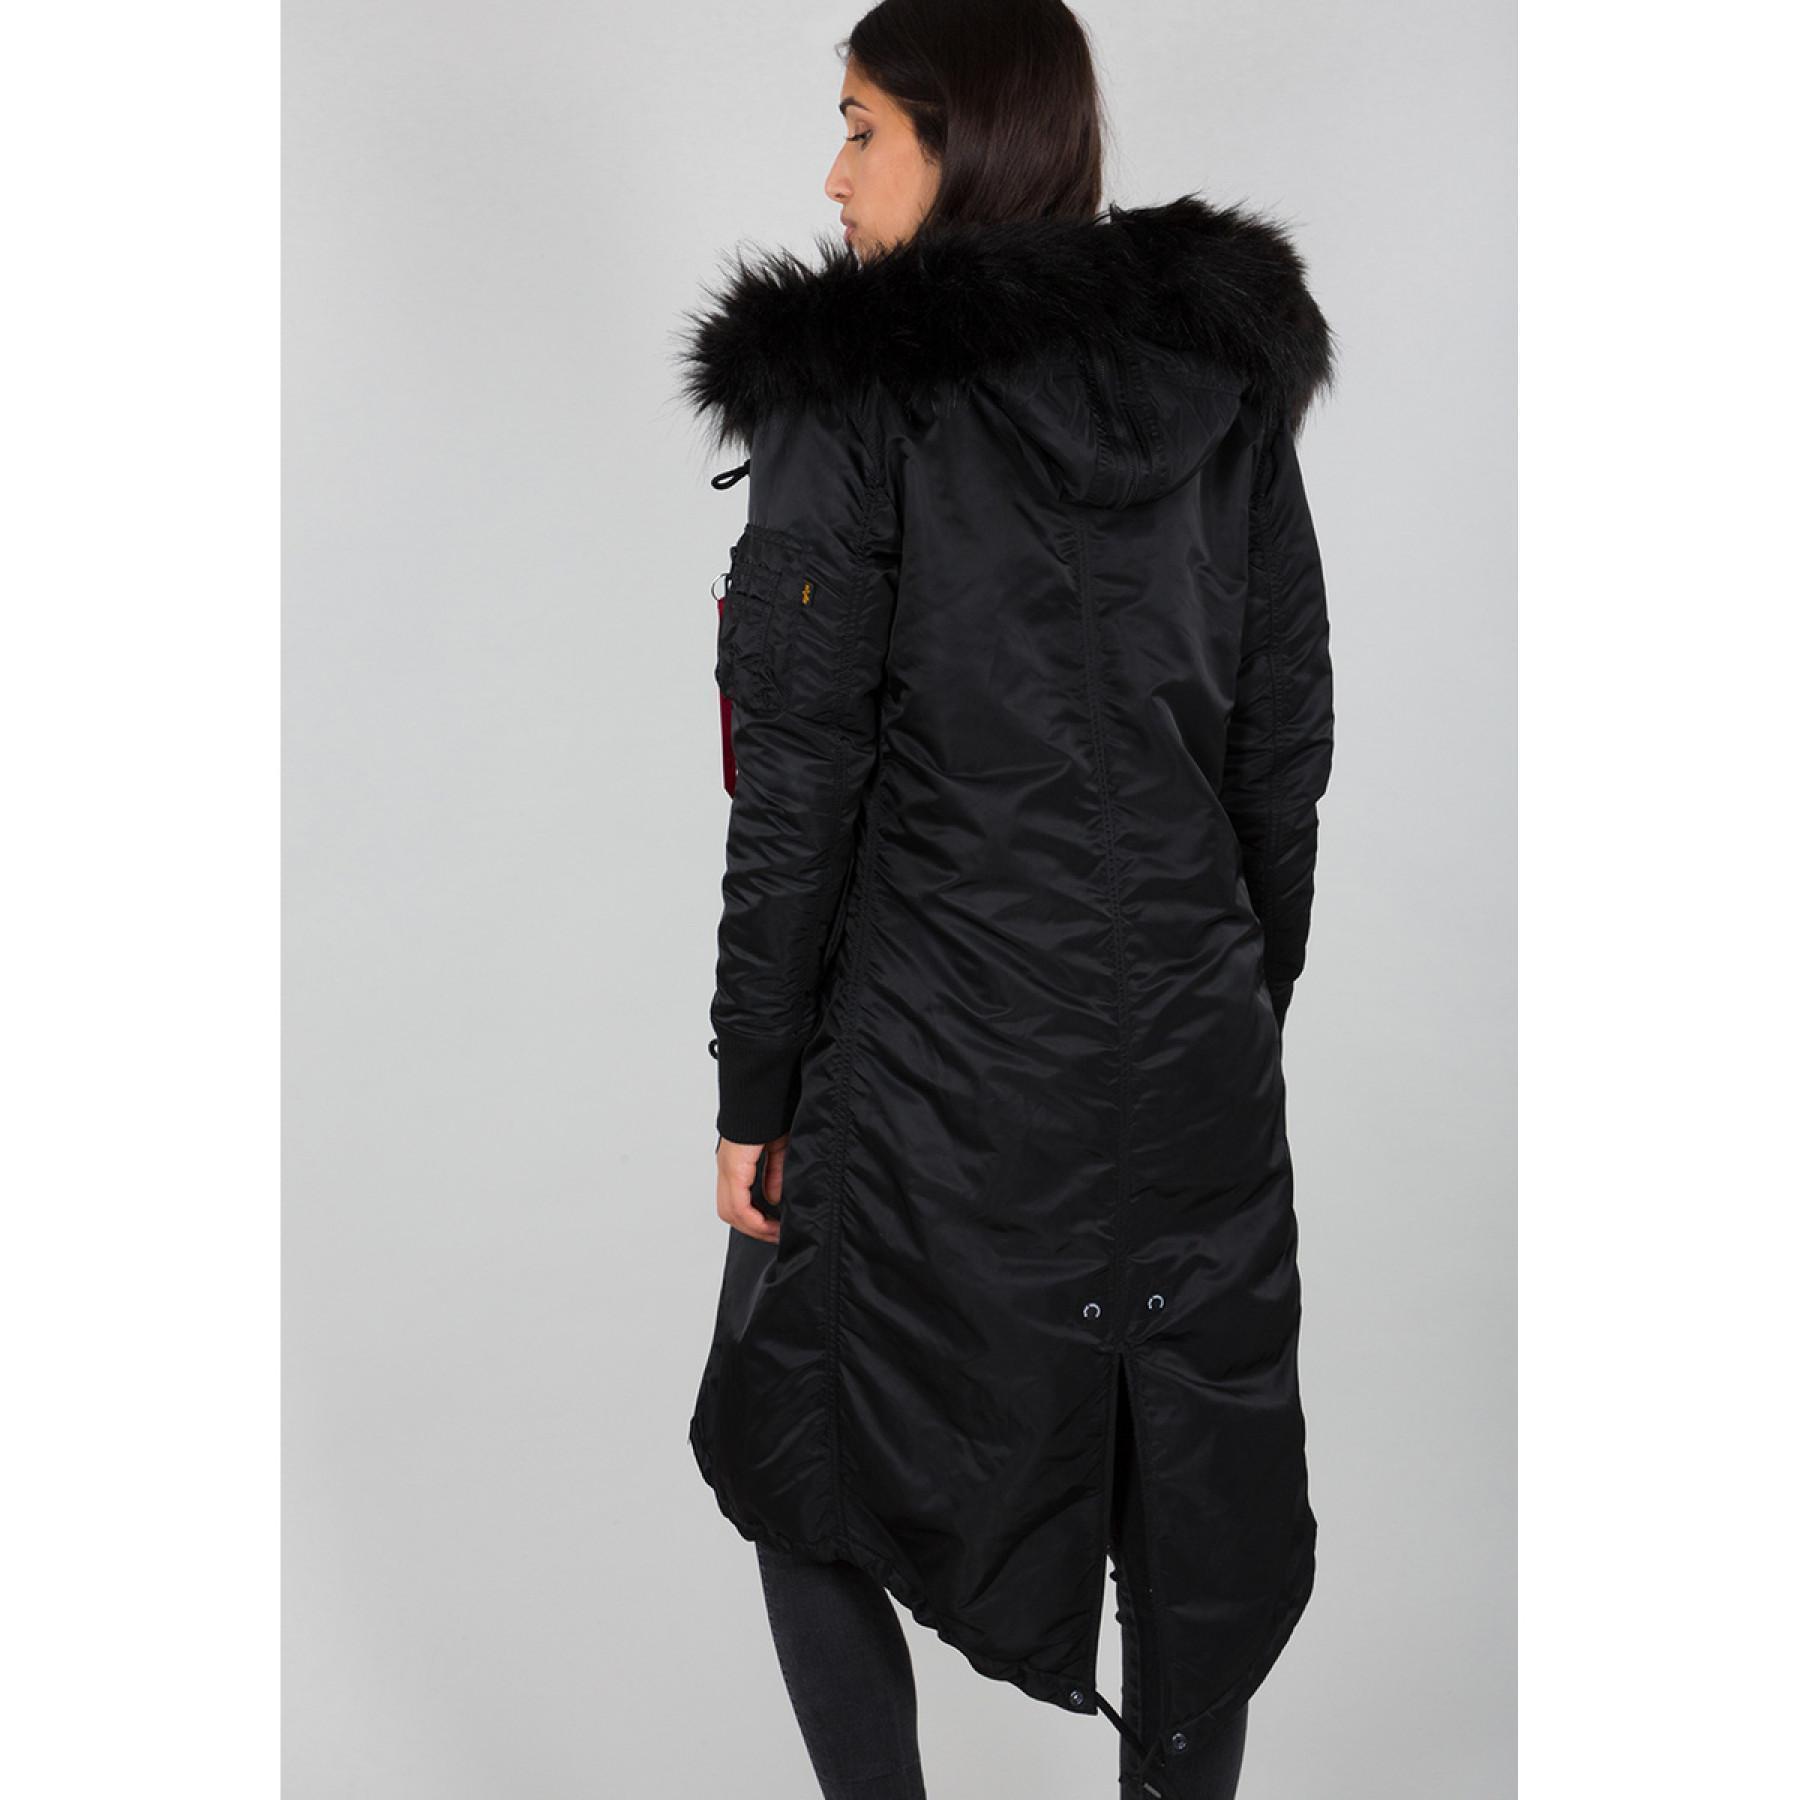 Women Alpha & parka Long Fishtail - Industries Coats - - Women\'s Jackets Clothing